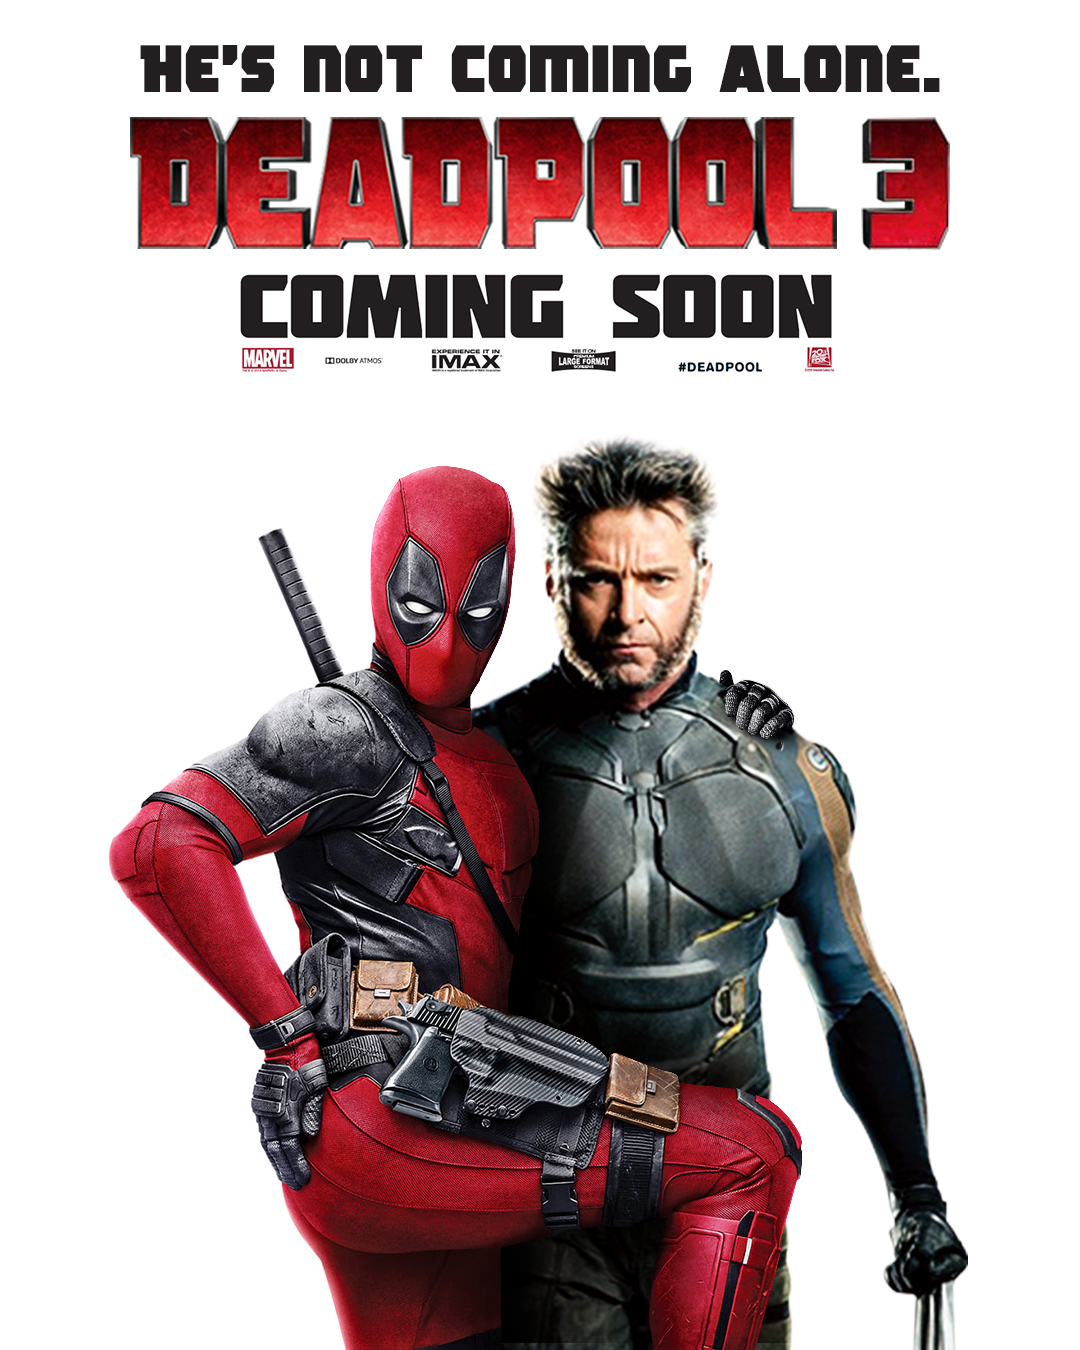 My take on a poster for Deadpool 3 (oc) : r/marvelstudios